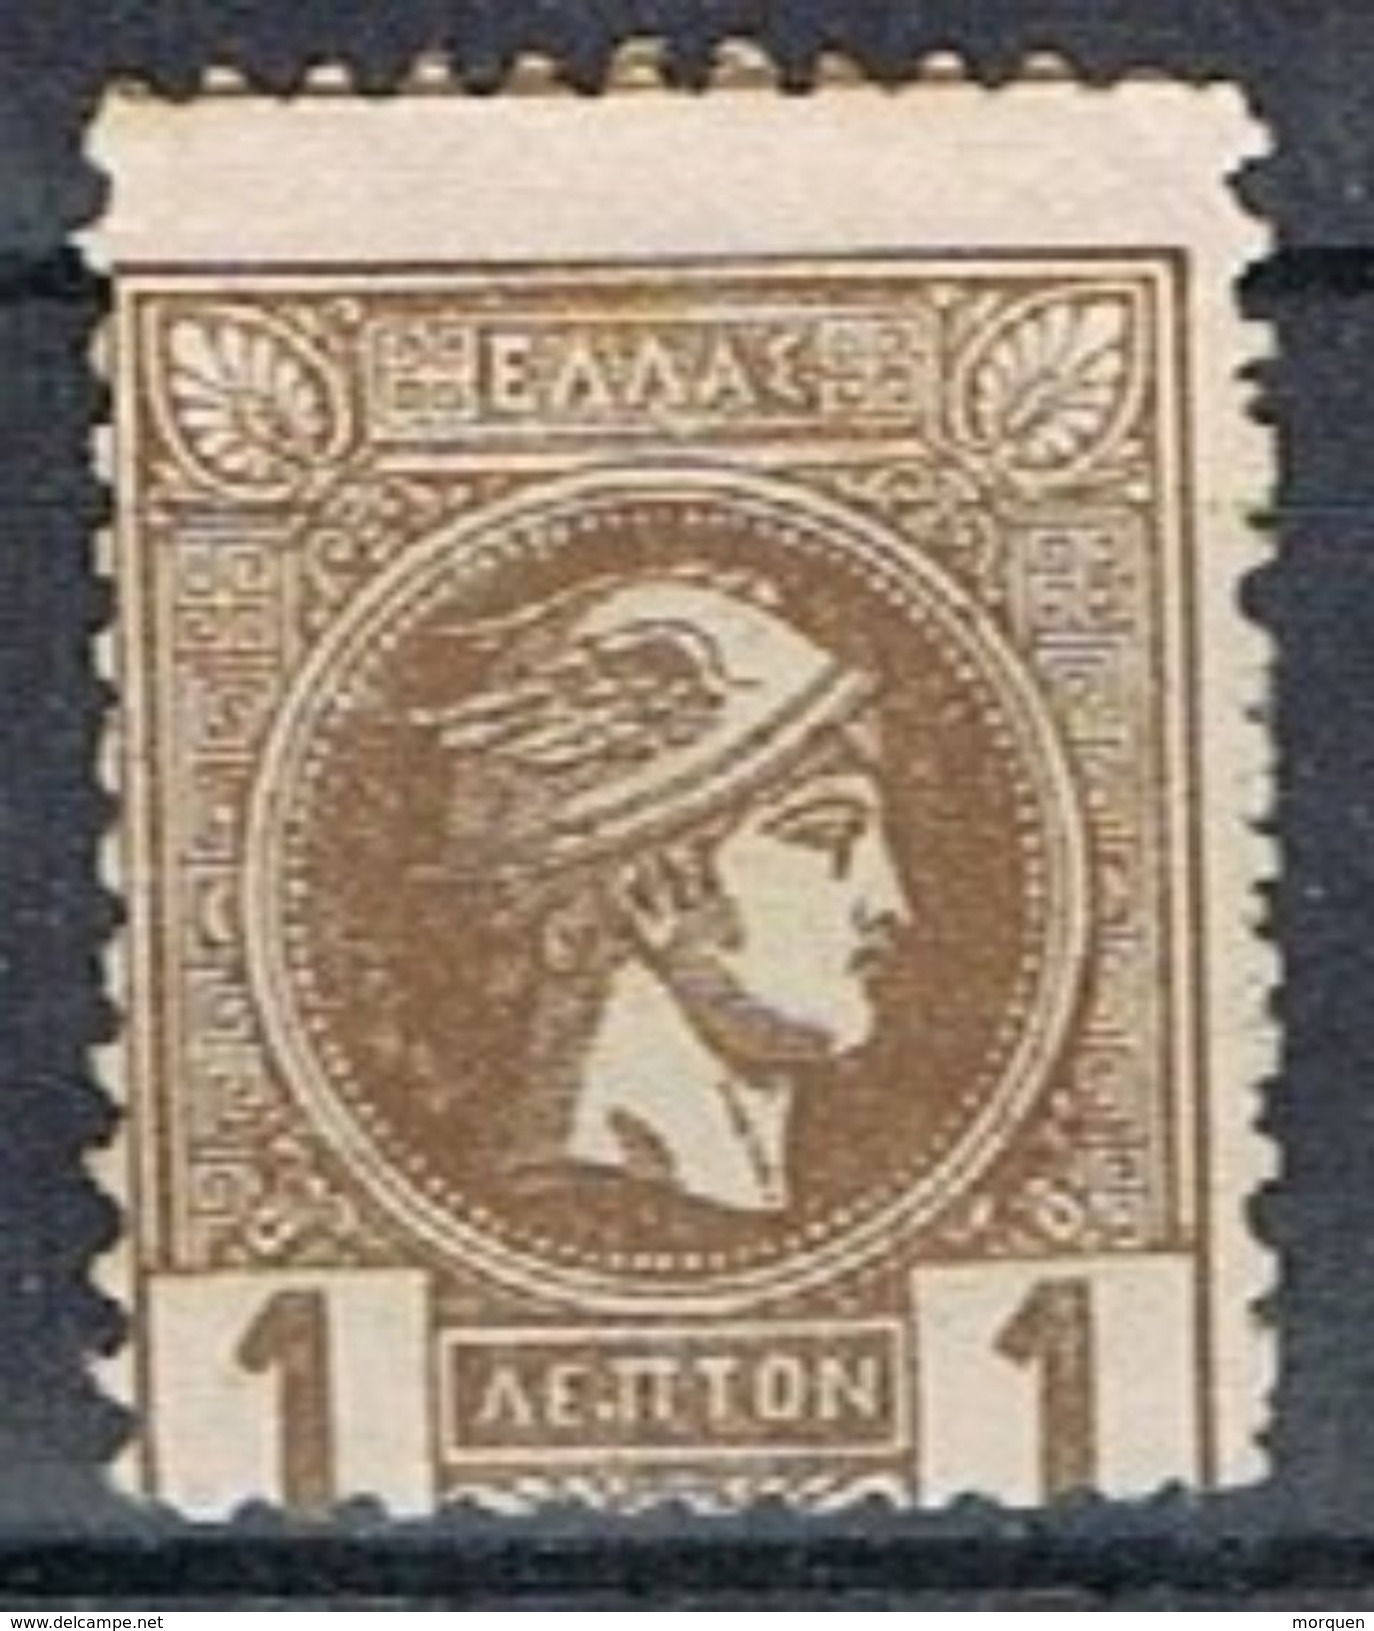 Sello GRECIA, Hermes, Impresion Local 1889, Dentado 11 1/2   Yvert Num 91a * - Unused Stamps